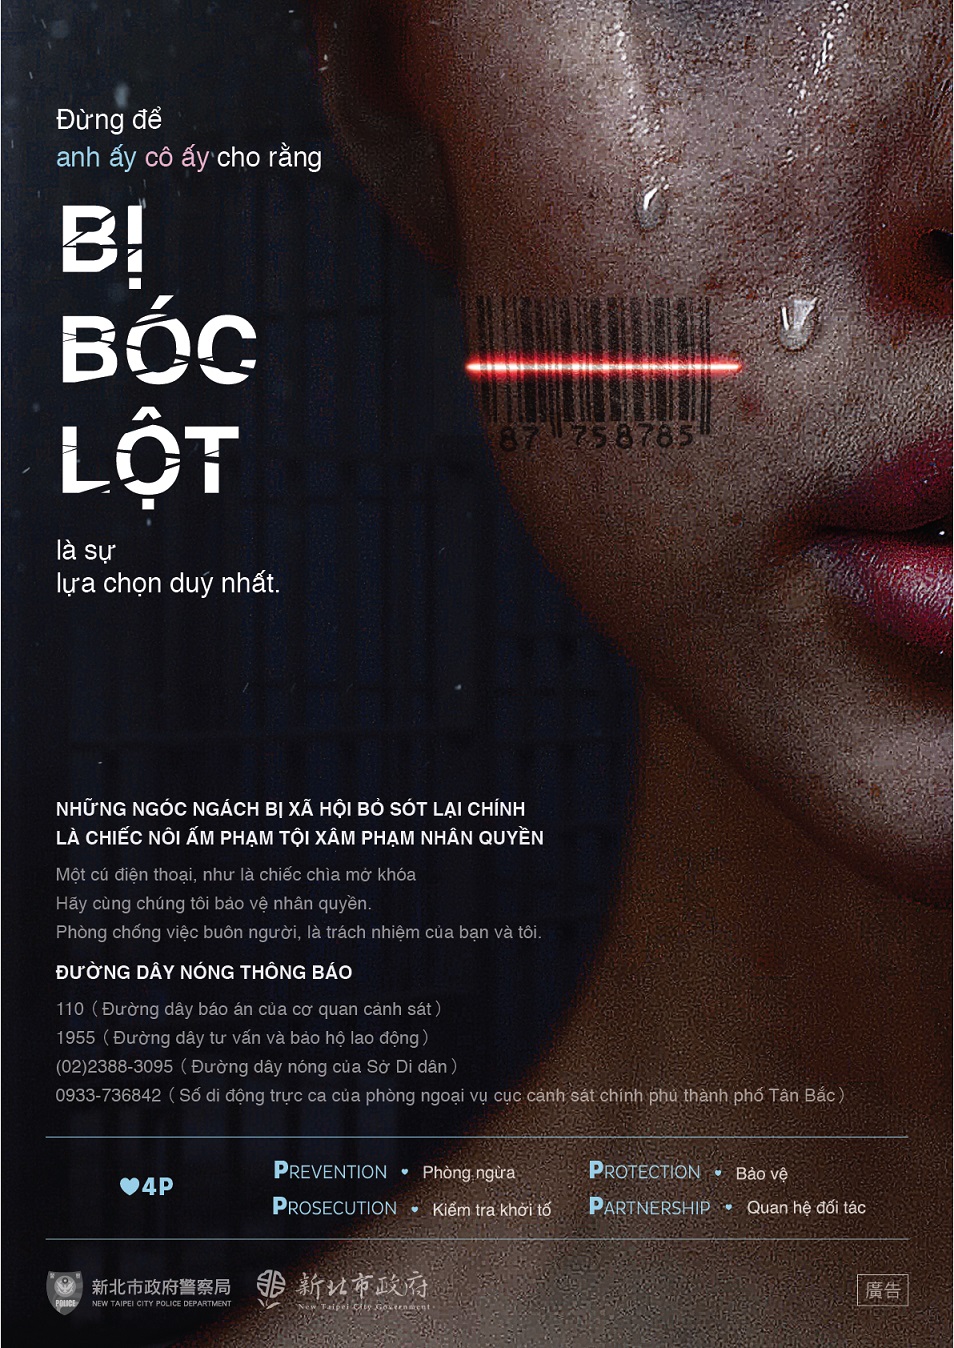 anti-human trafficking Propaganda poster picture in Vietnamese